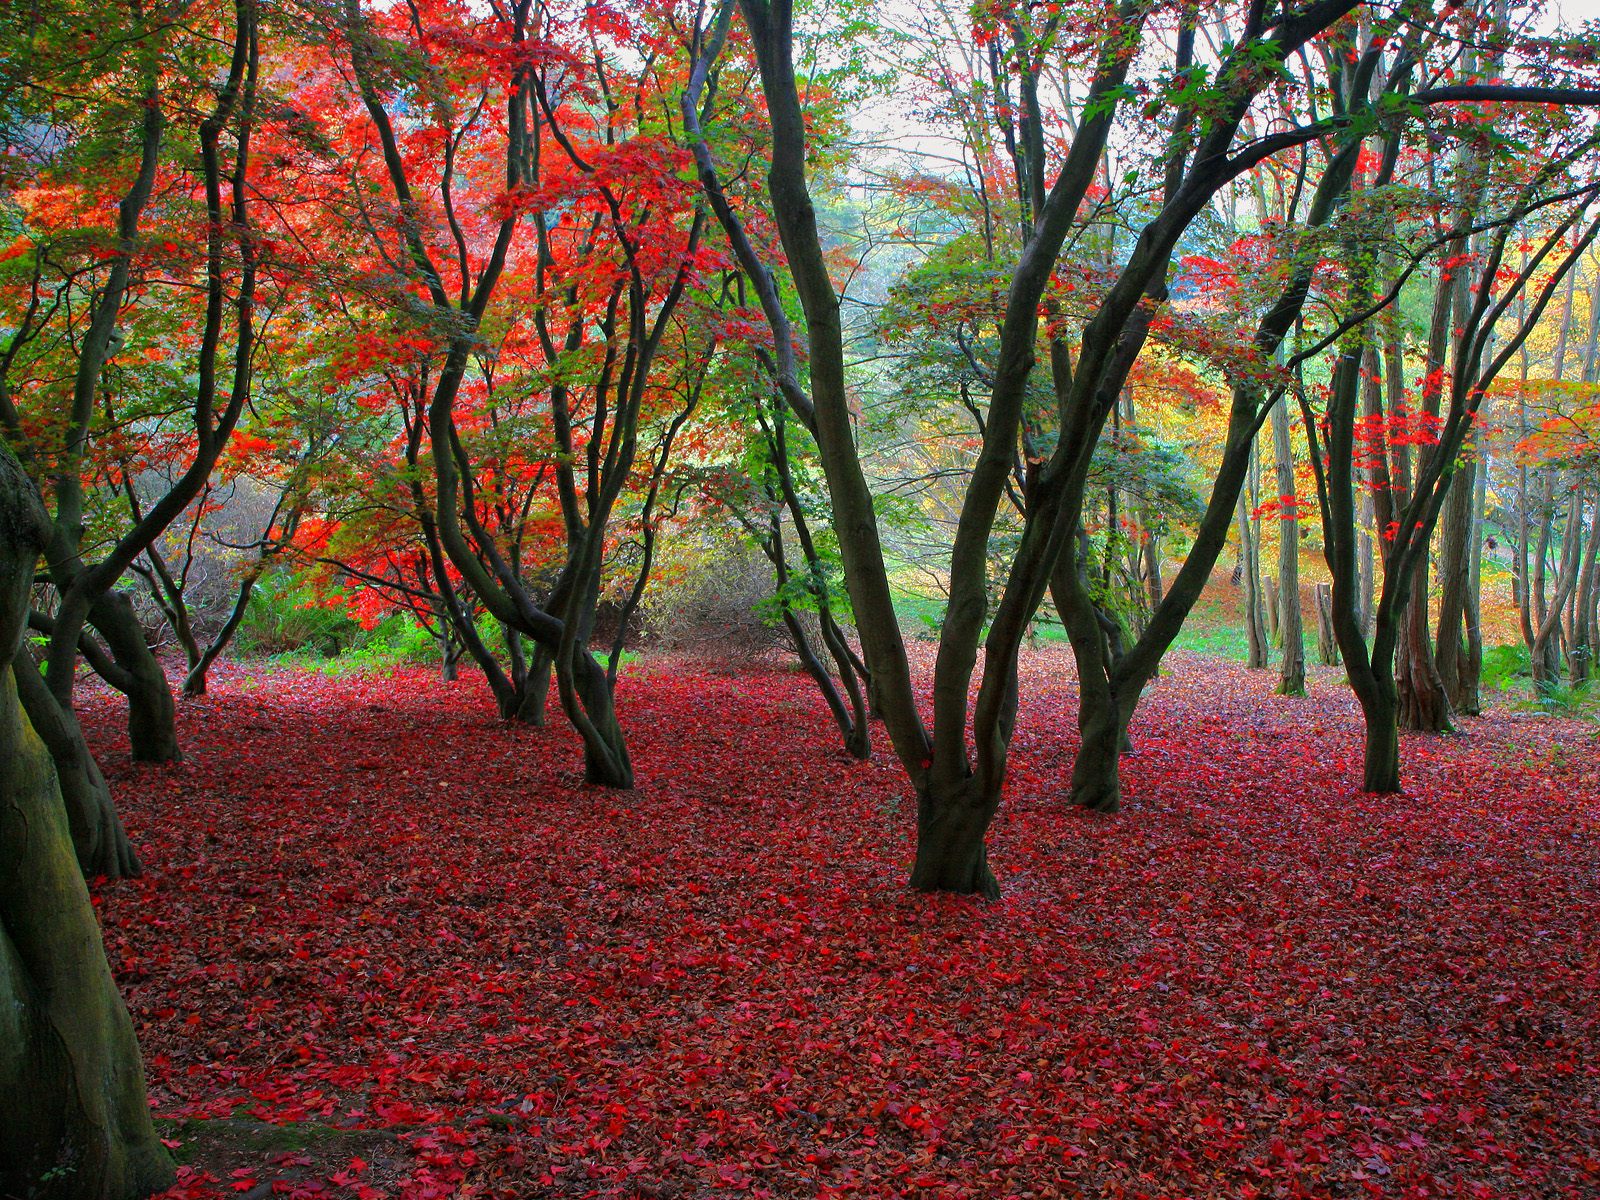 Autumn leaves carpet the ground beneath a tree.